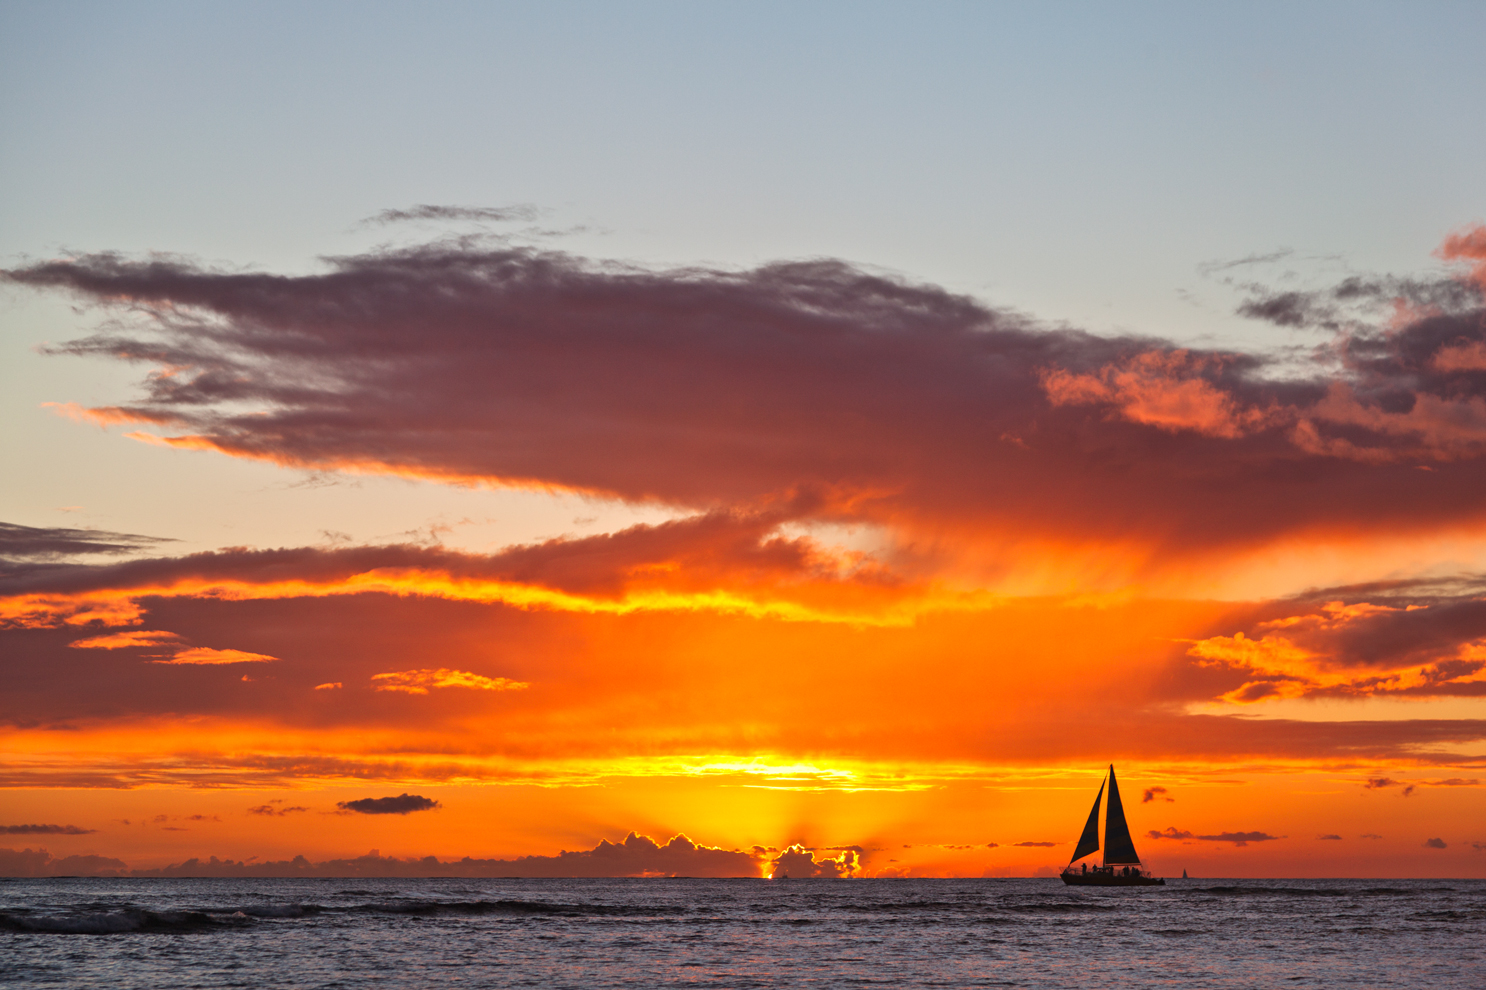 sailboat-on-the-horizon-at-sunset-travel-photographer.jpg